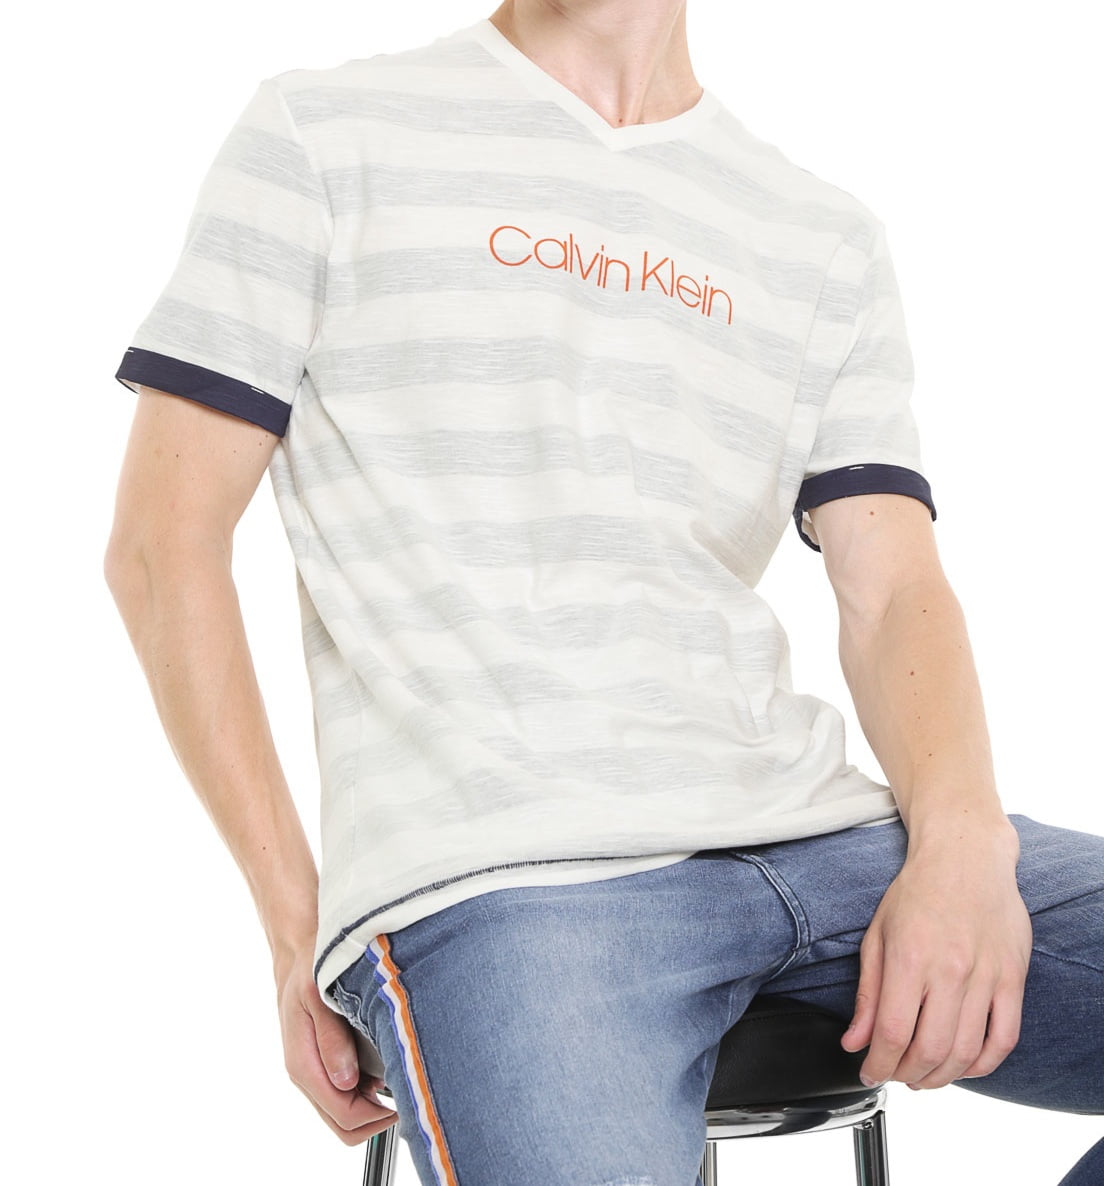 Camiseta Calvin Klein masculina listra?